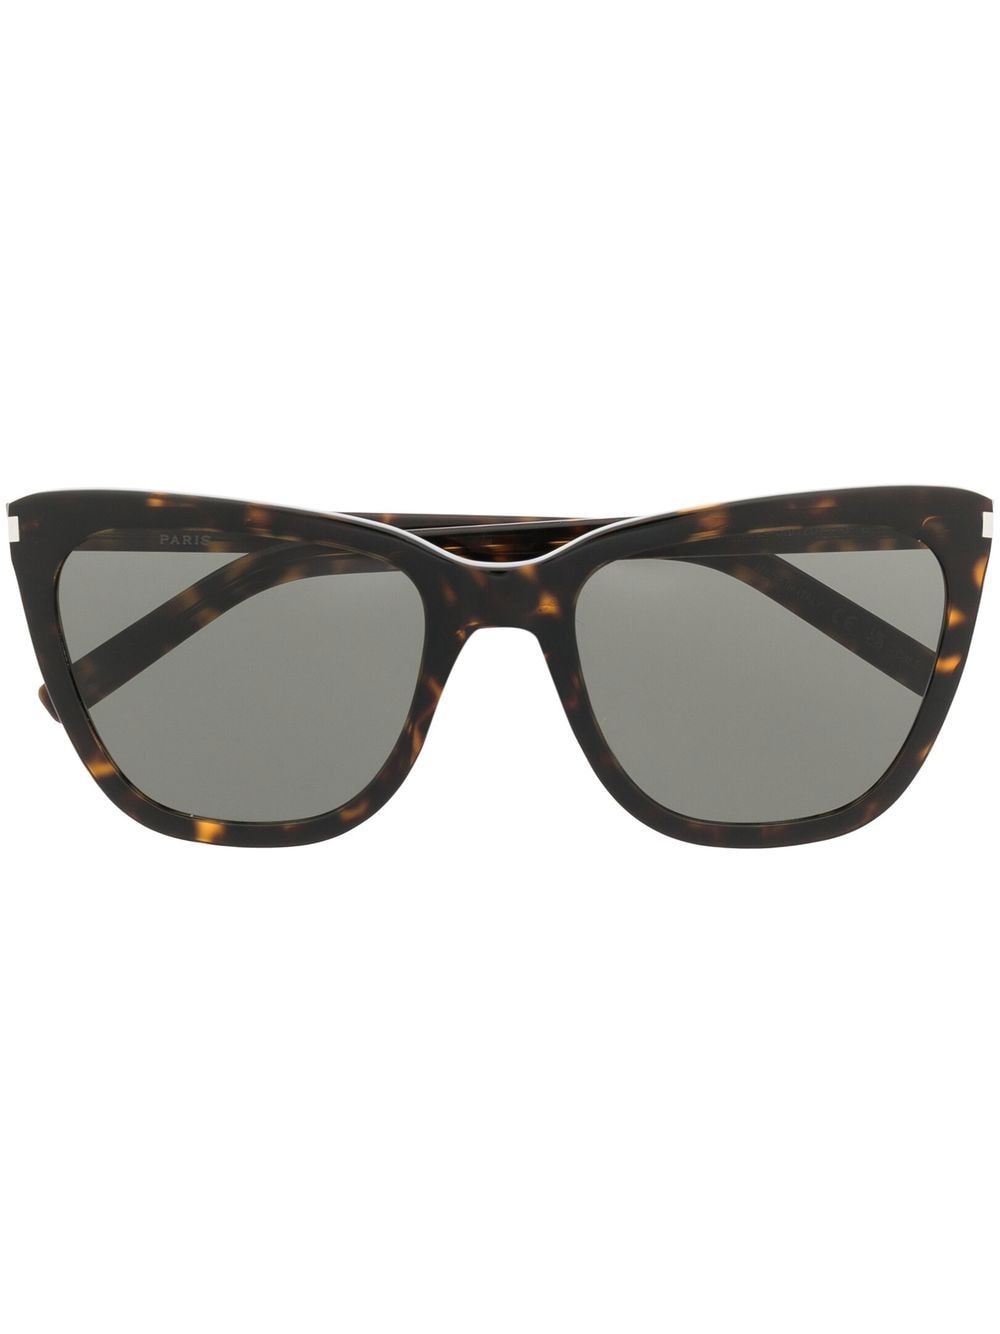 Saint Laurent Eyewear Tortoiseshell oversized sunglasses - Brown von Saint Laurent Eyewear